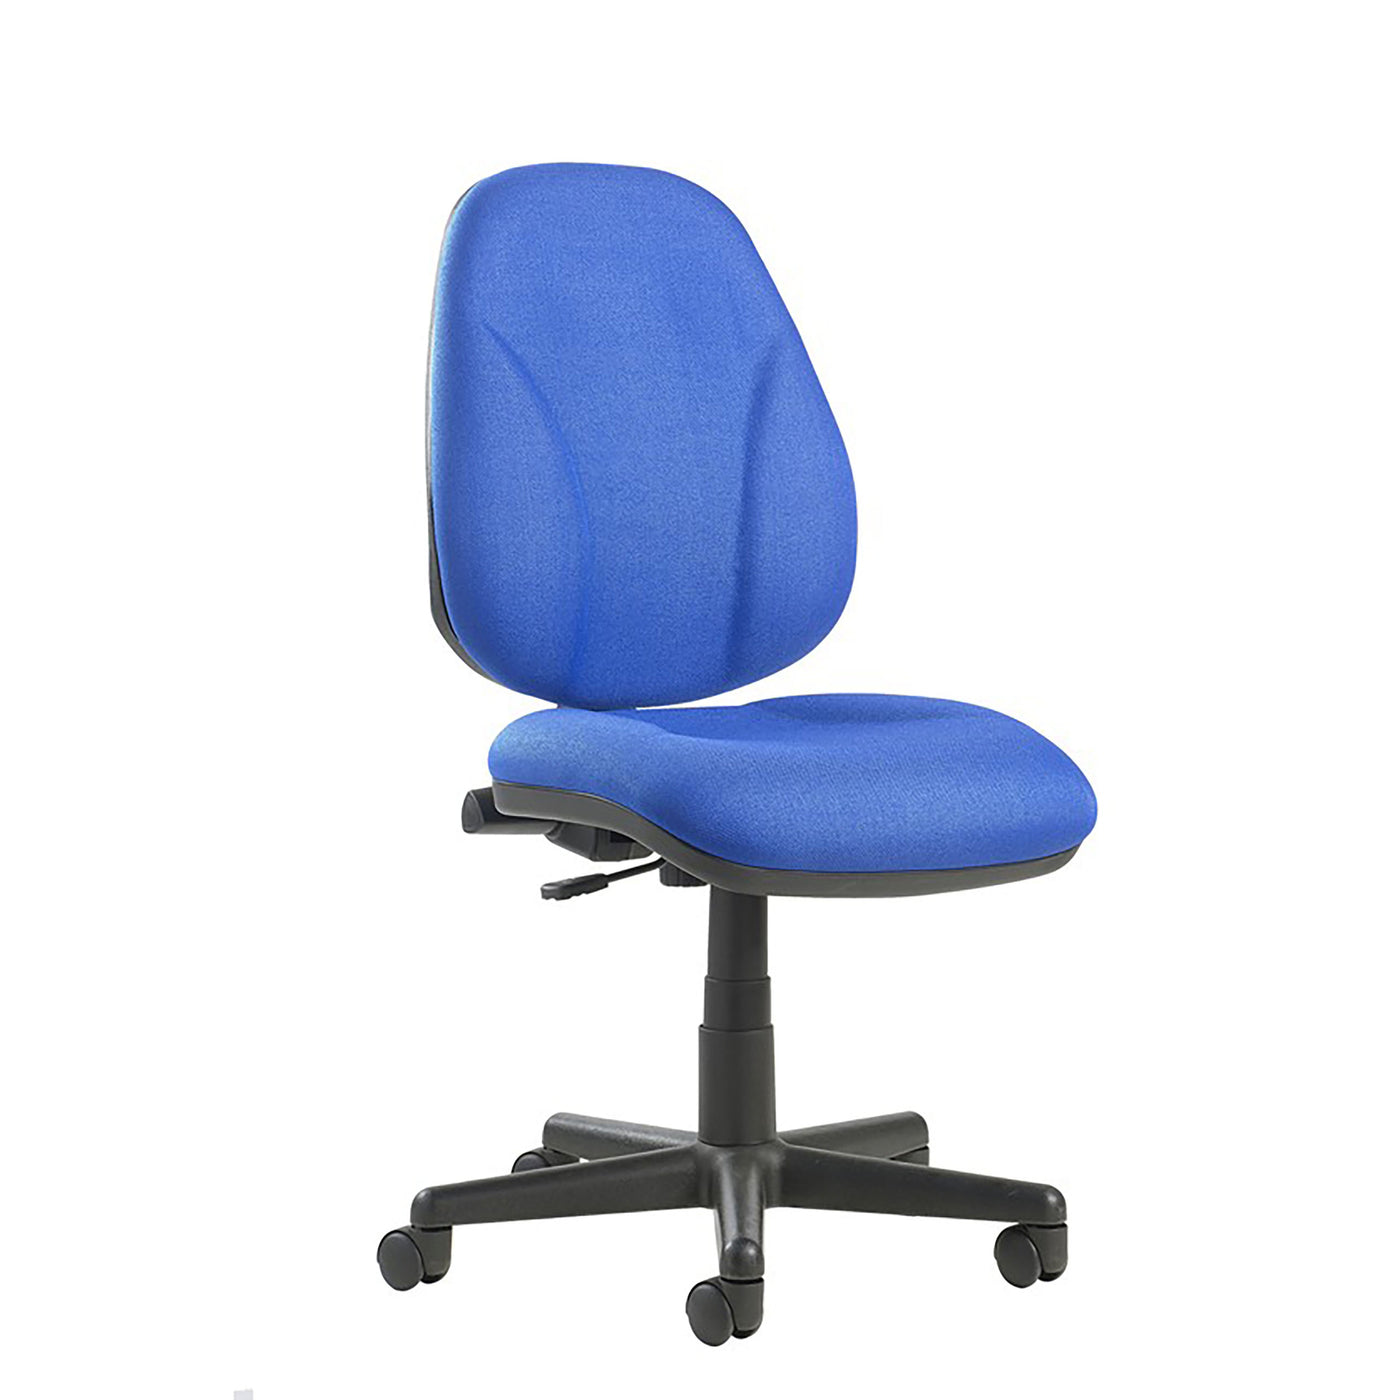 Bilbao Fixed Arm Office Chair | Home Office Chair | Ergonomic Chair